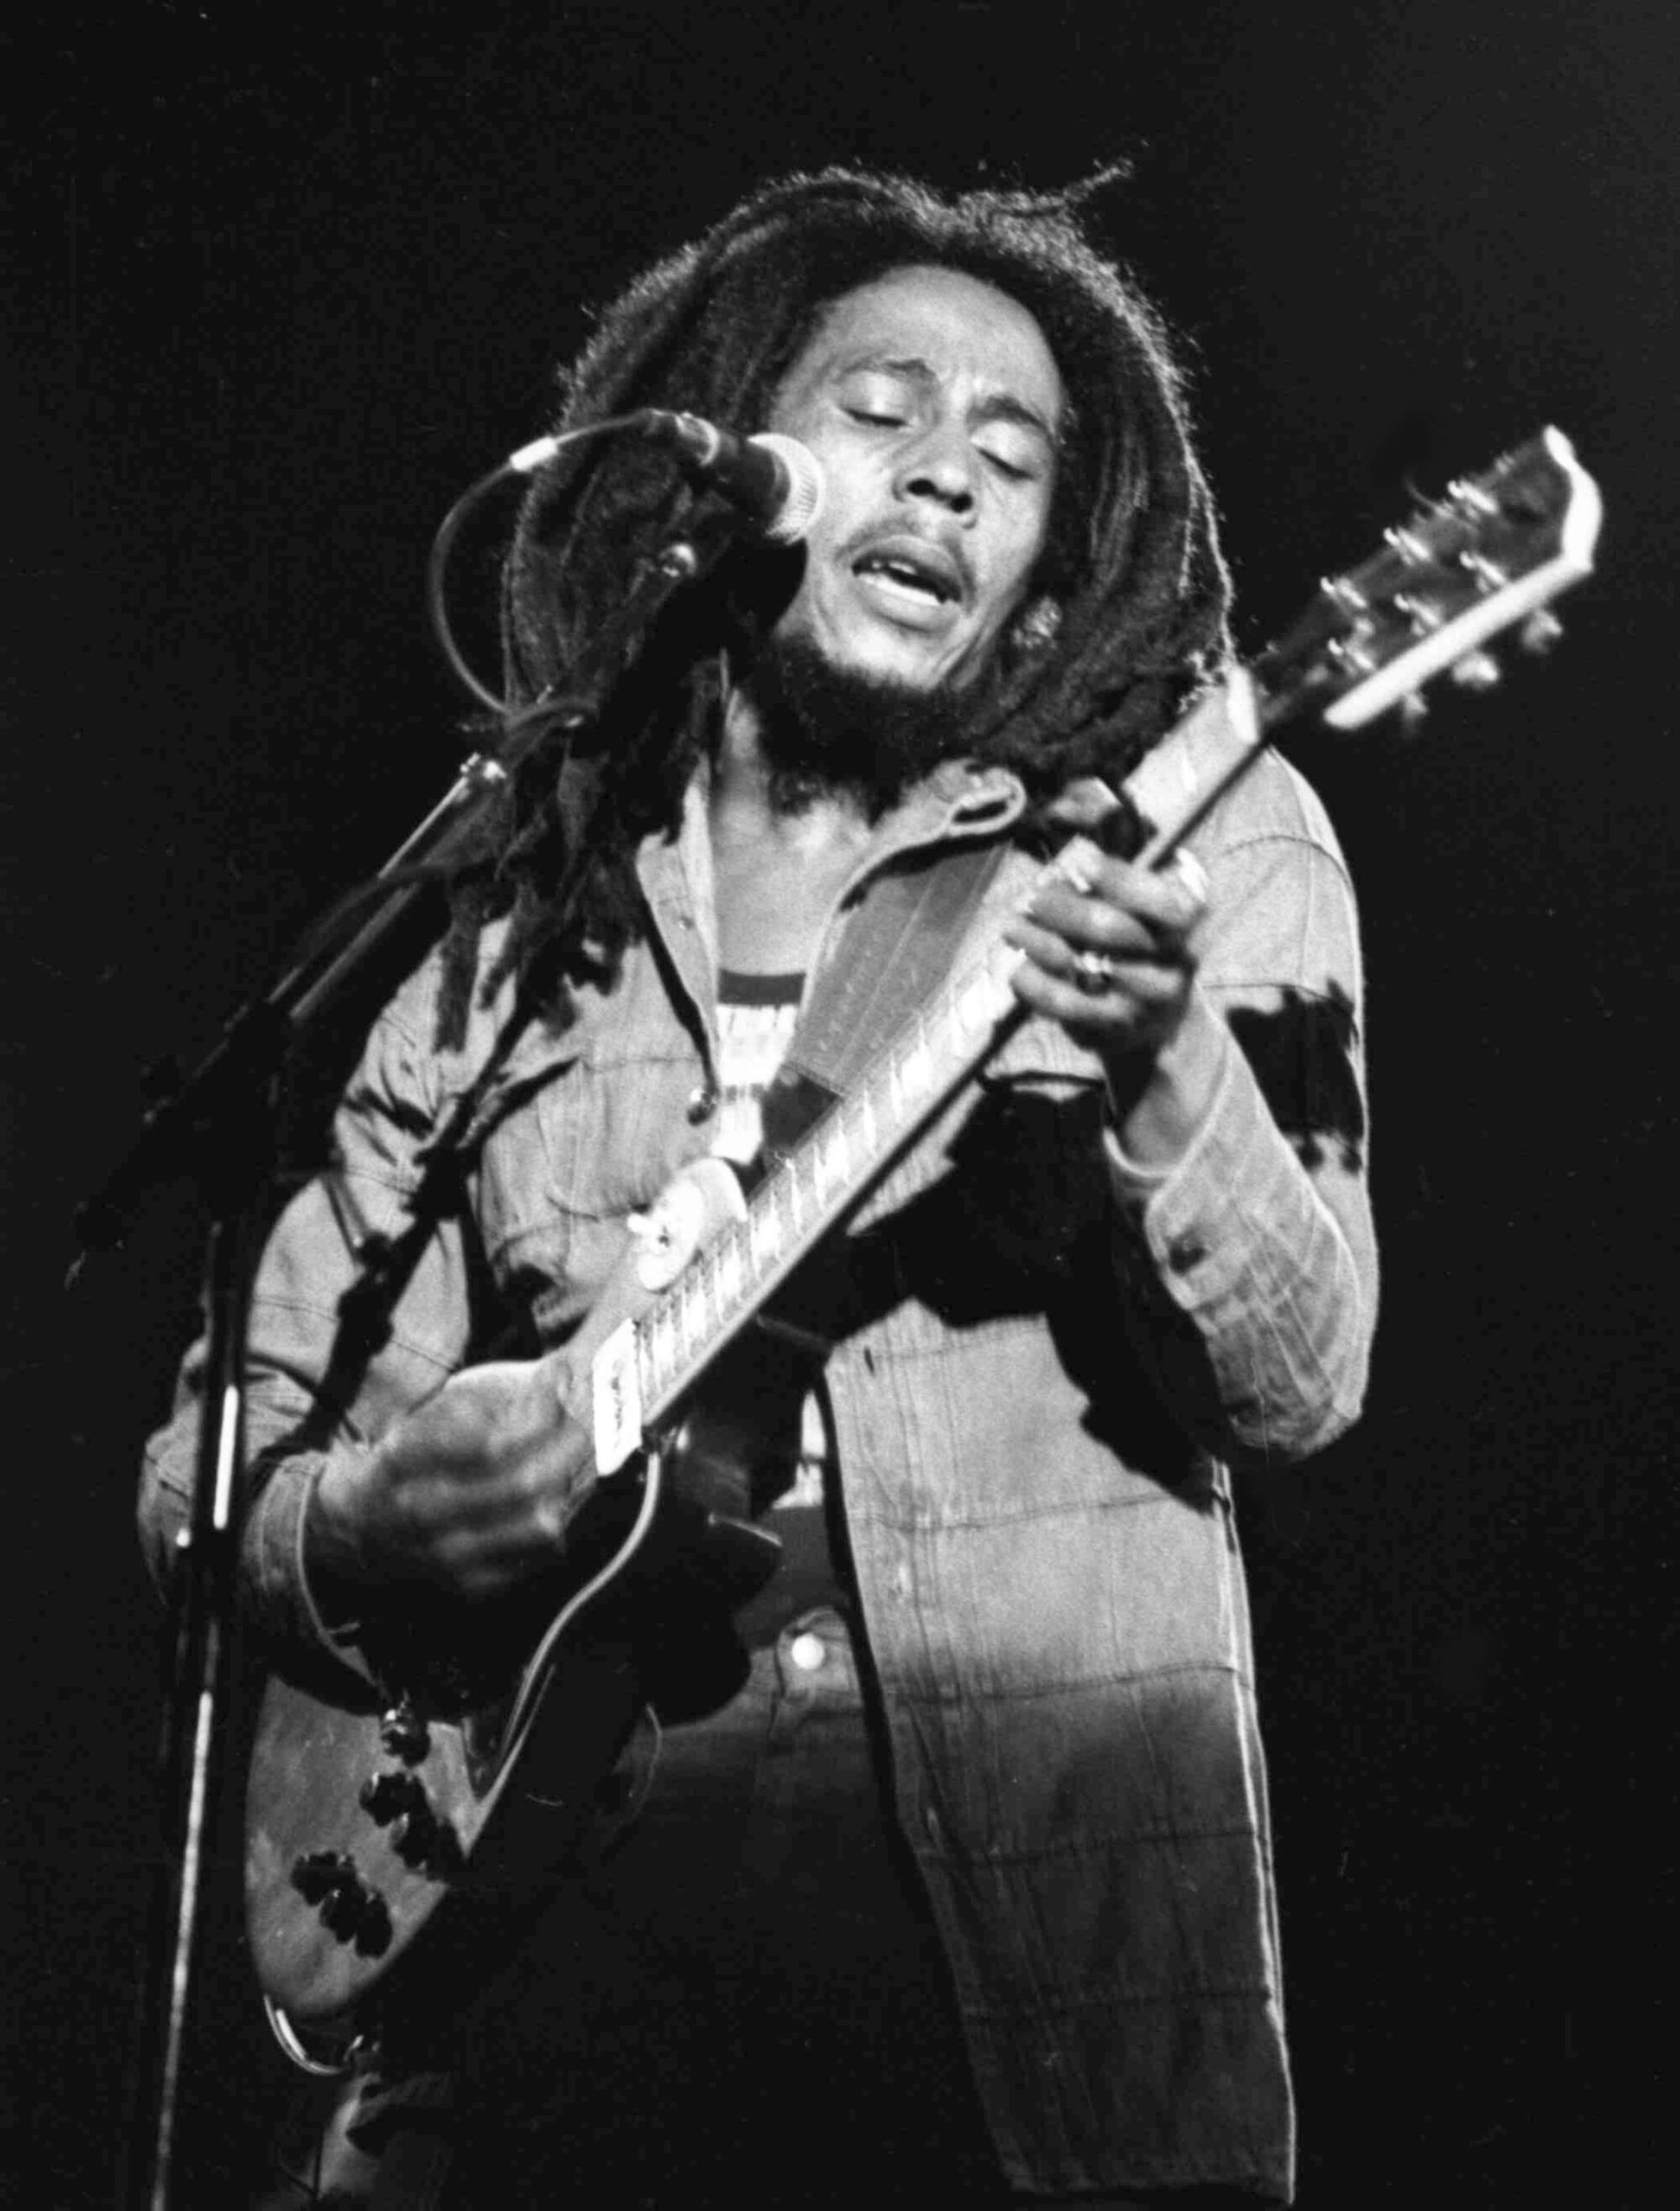  July 4, 1980, Bob Marley performs in Paris